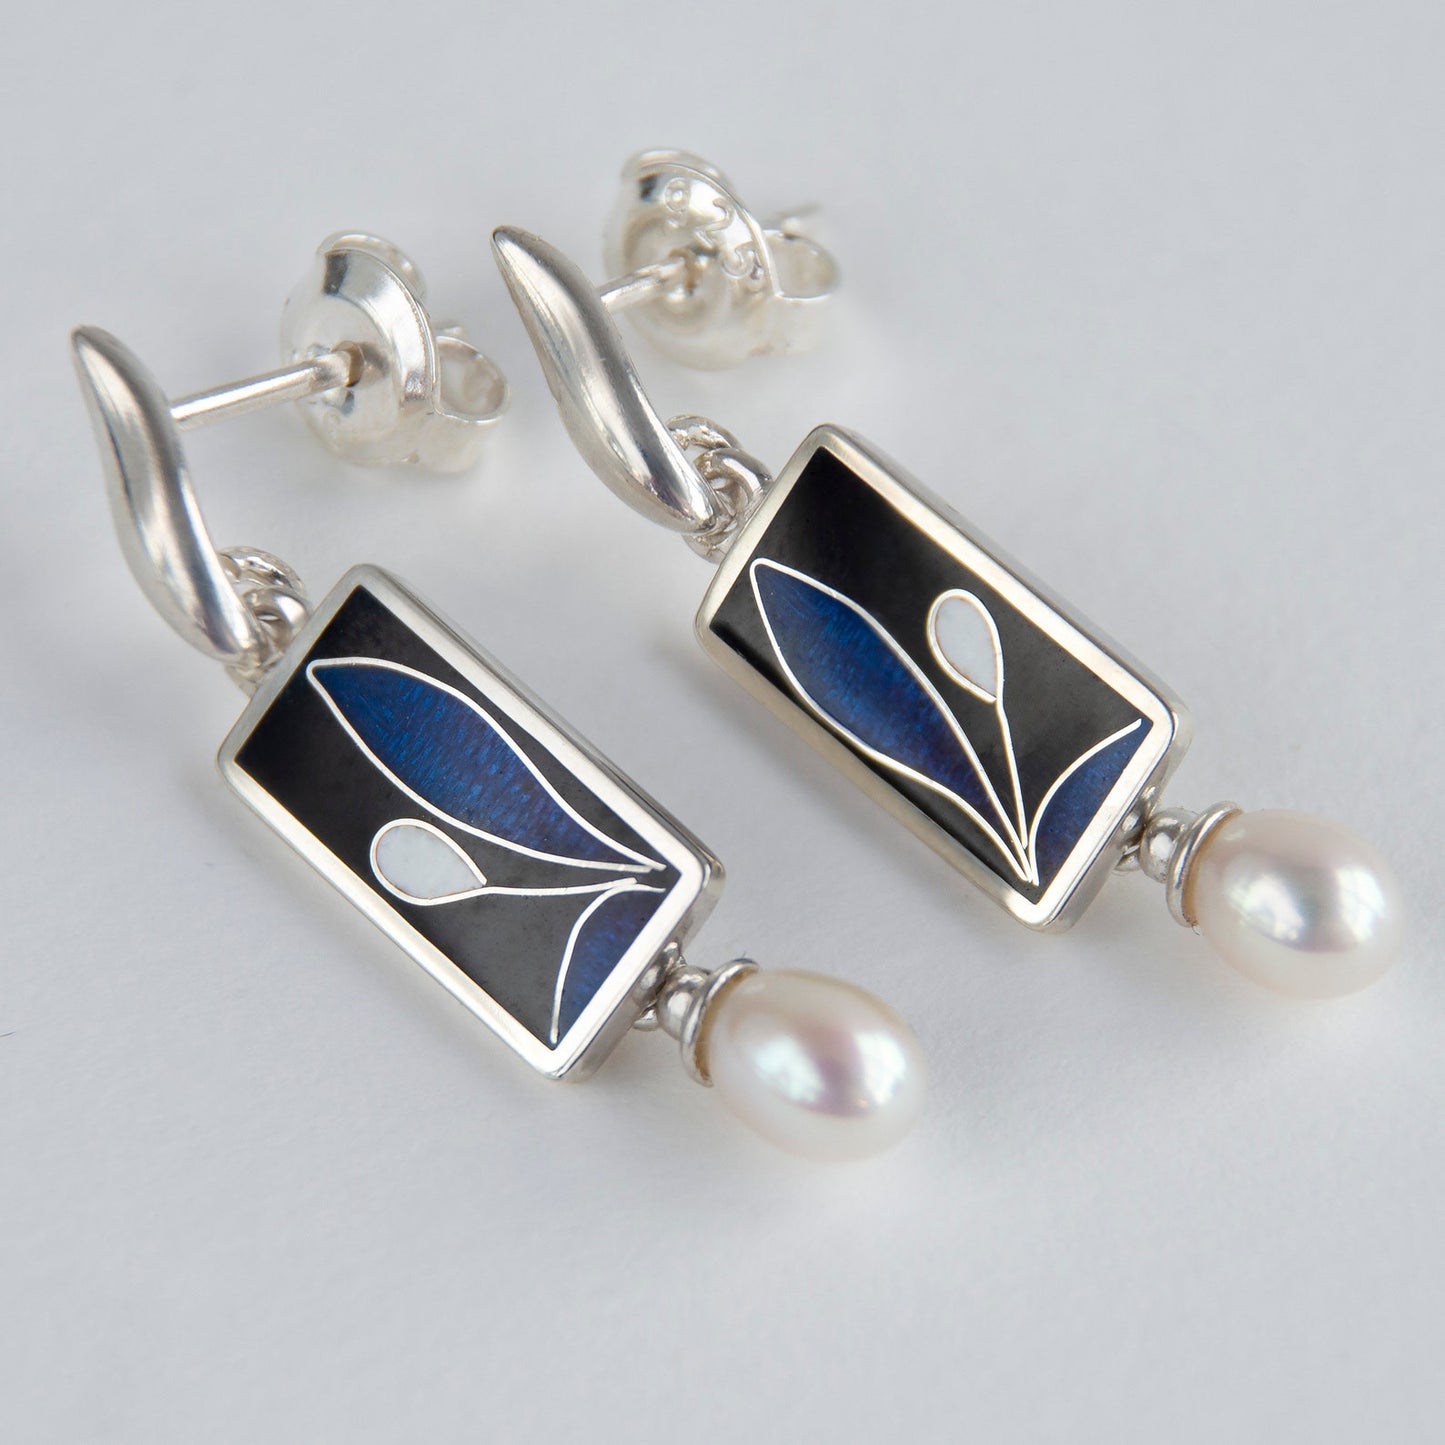 Dark Rectangle Cloisonné Enamel Earrings With White Pearls